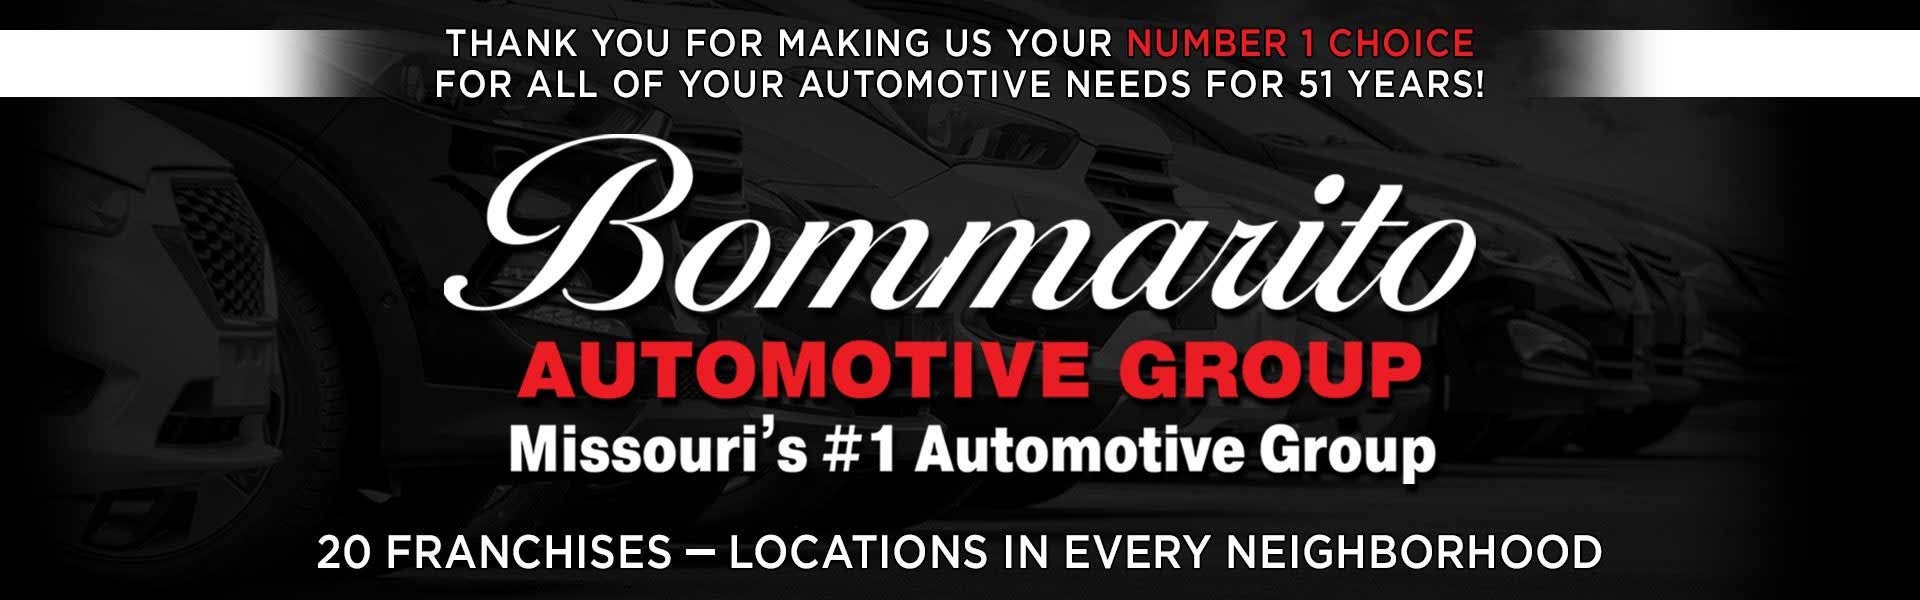 Missouri's #1 Automotive Group - Bommarito Automotive Group